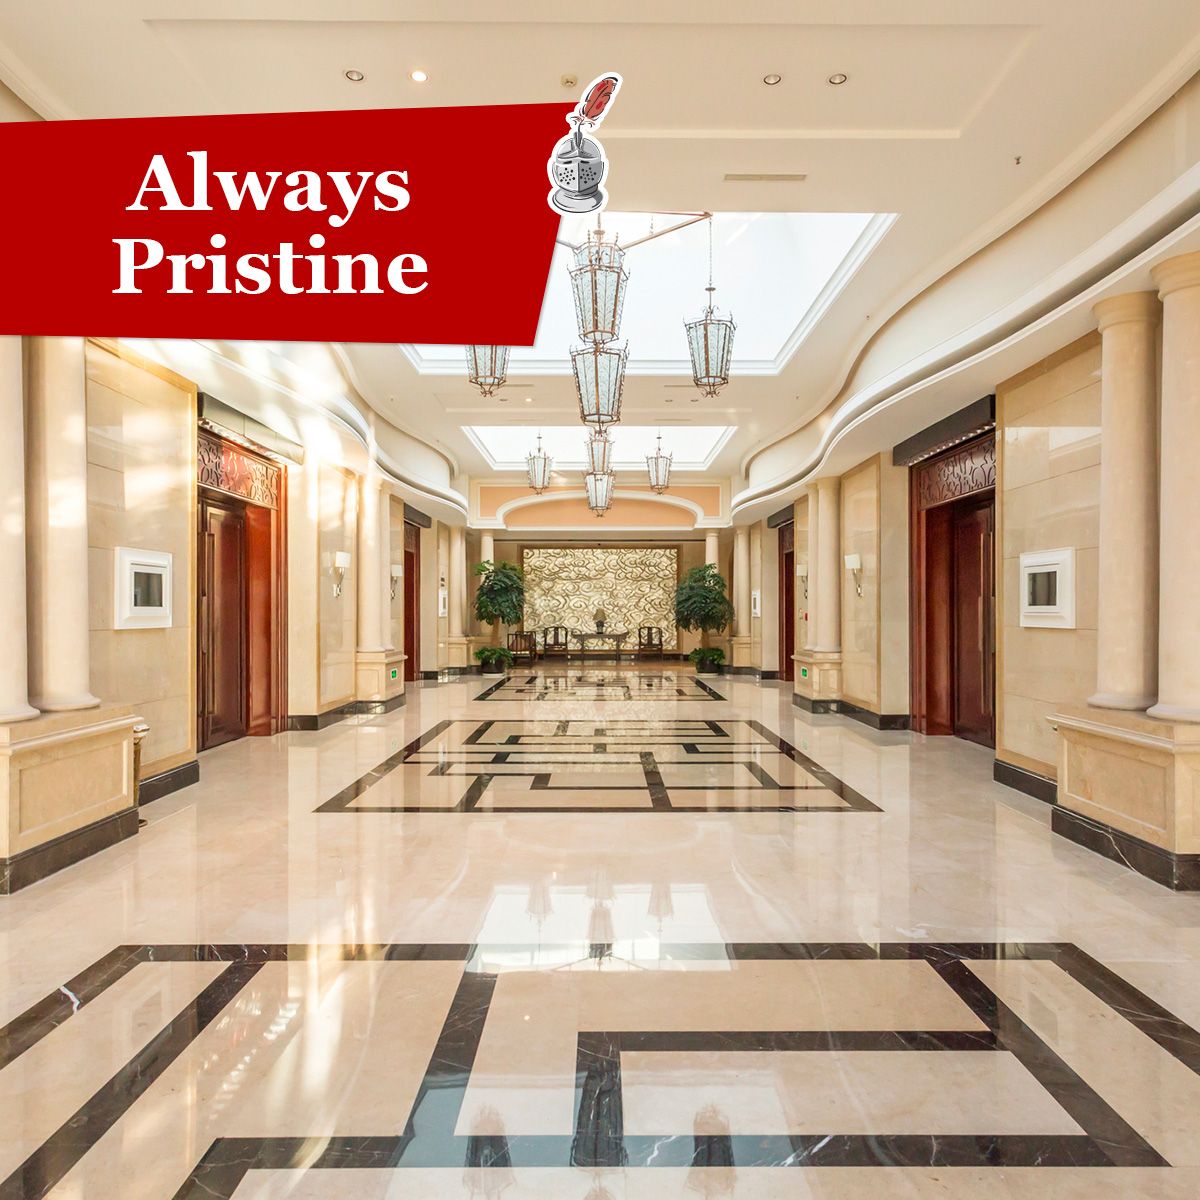 Always Pristine